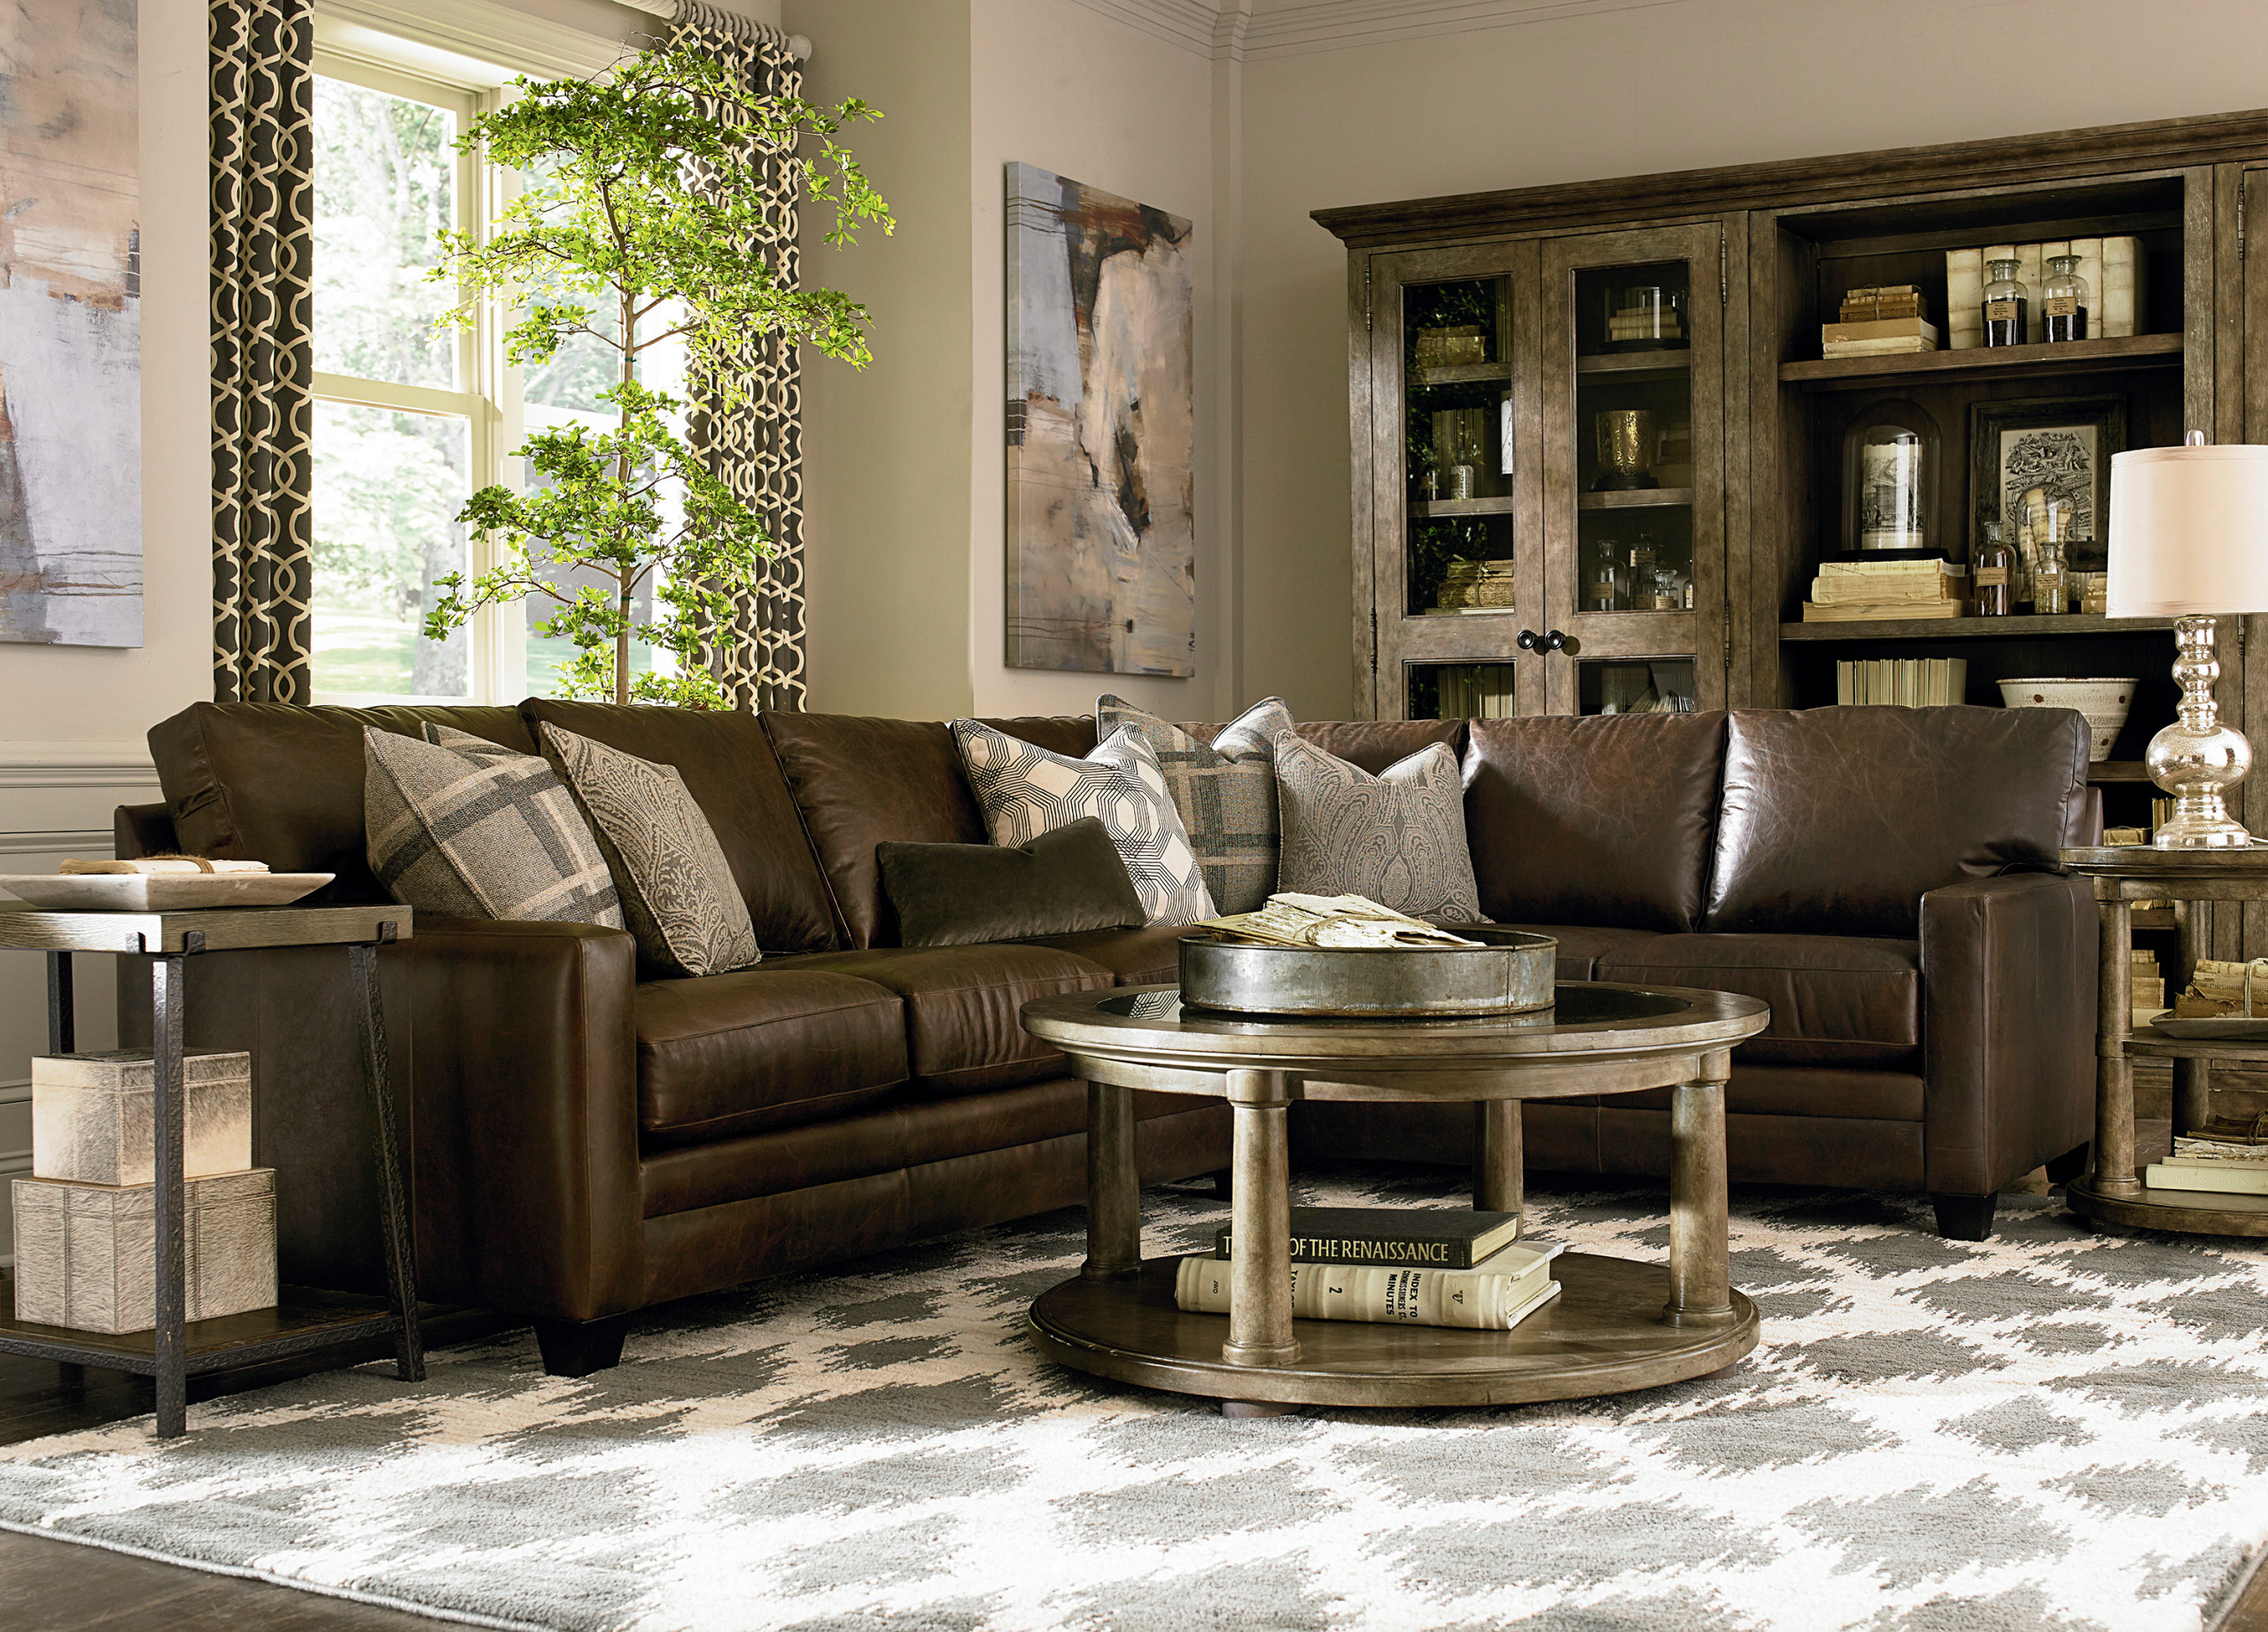 Custom Leather Ladson Sectional By Bassett Furniture Bassett Furniture Img~a1515581046f8b66 14 5701 1 Bad990f 